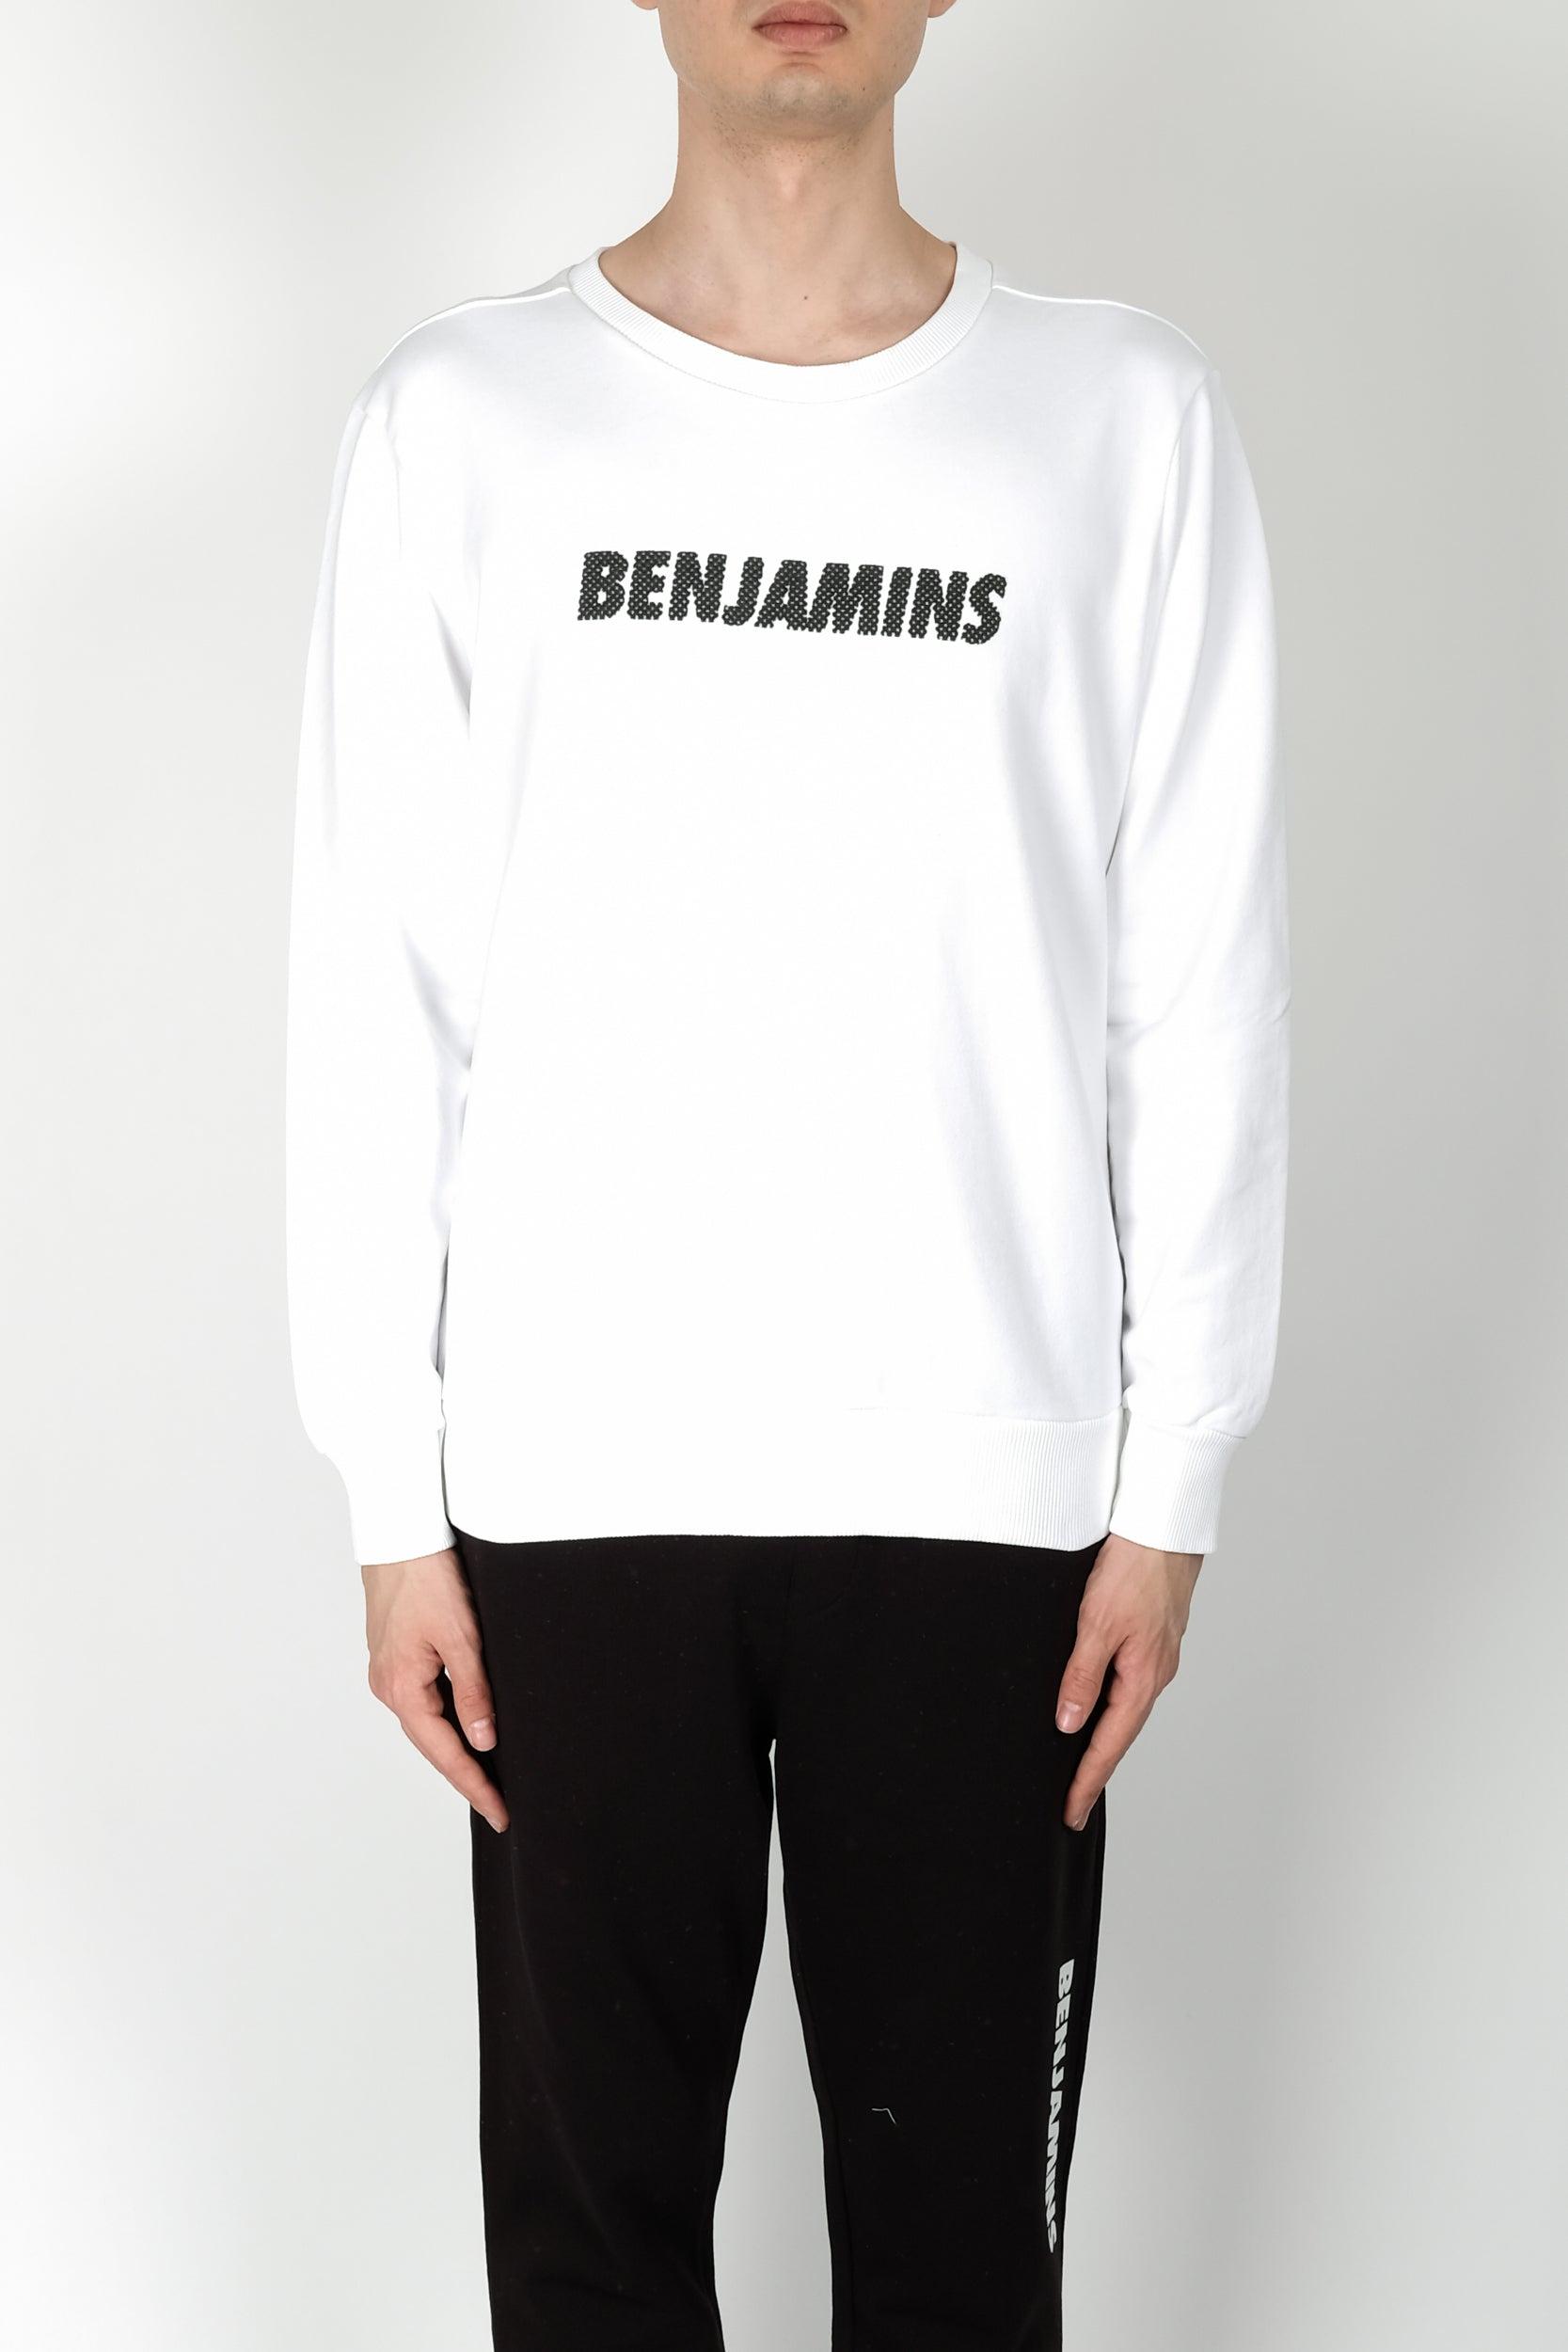 Les Benjamins Cotton Nacre Sweatshirt in White for Men - Lyst